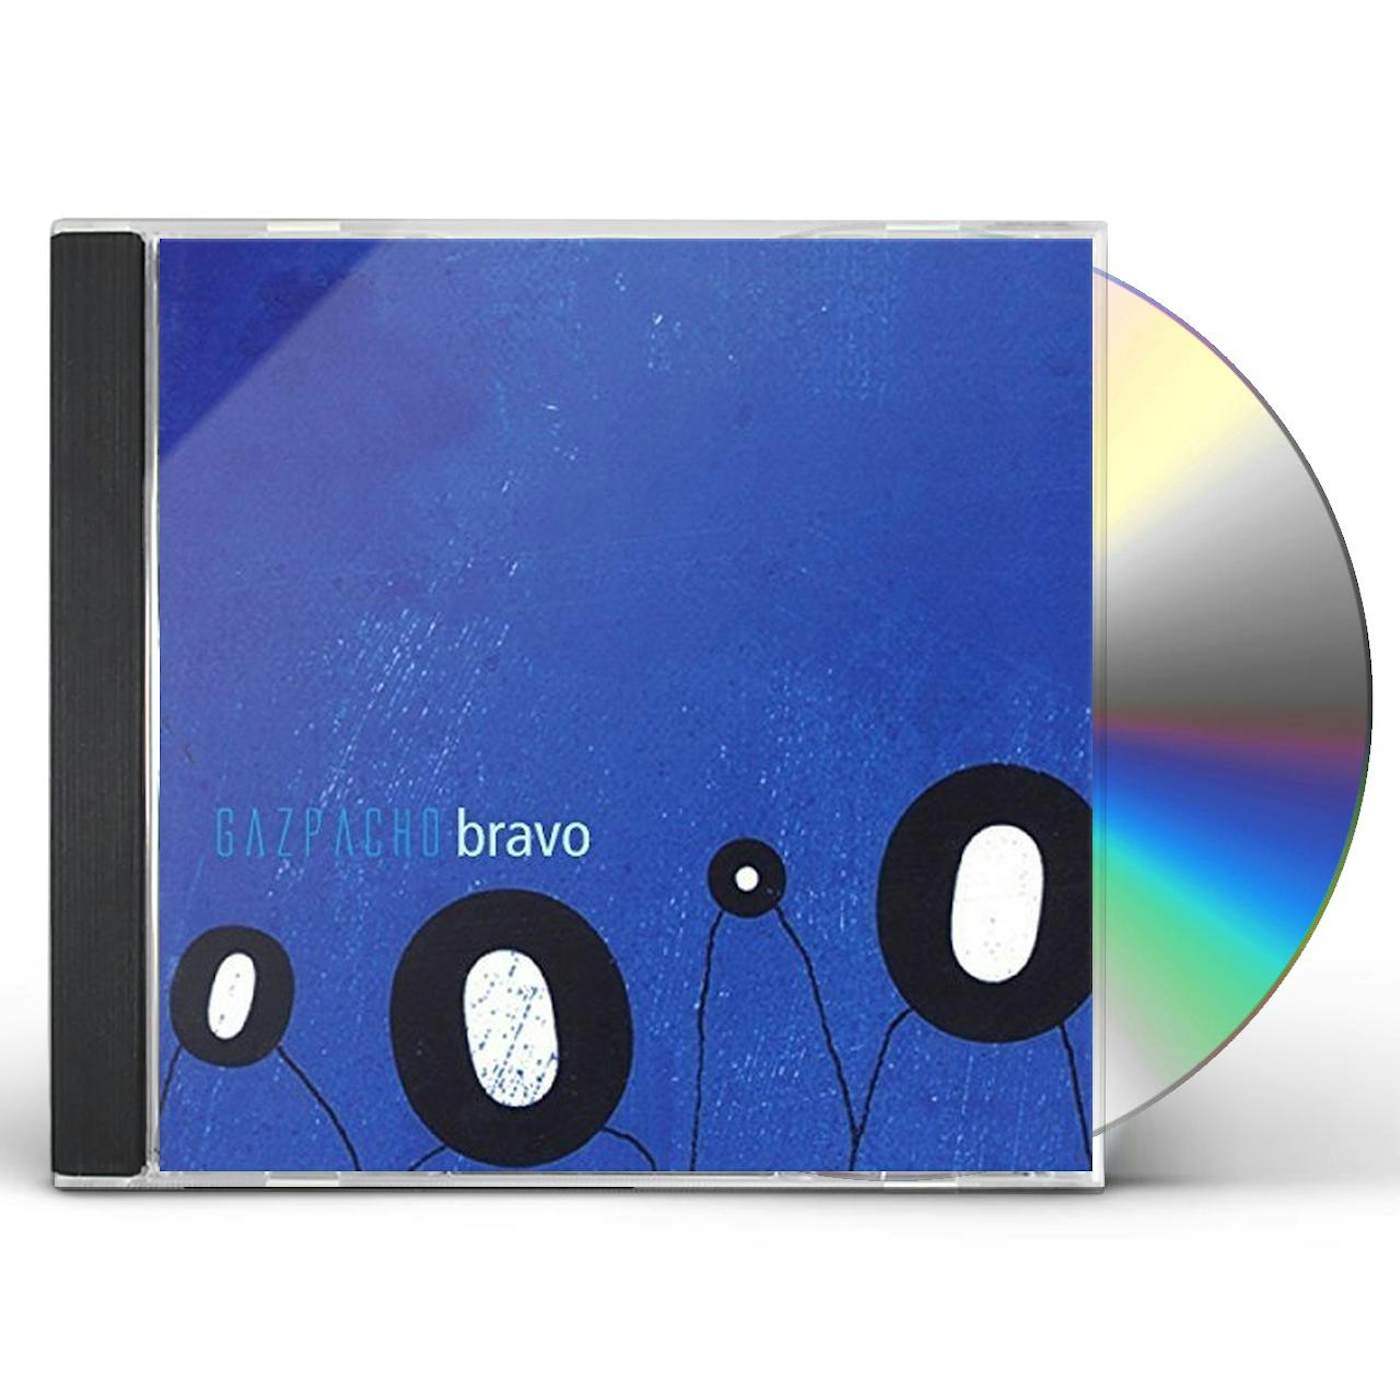 Gazpacho BRAVO CD